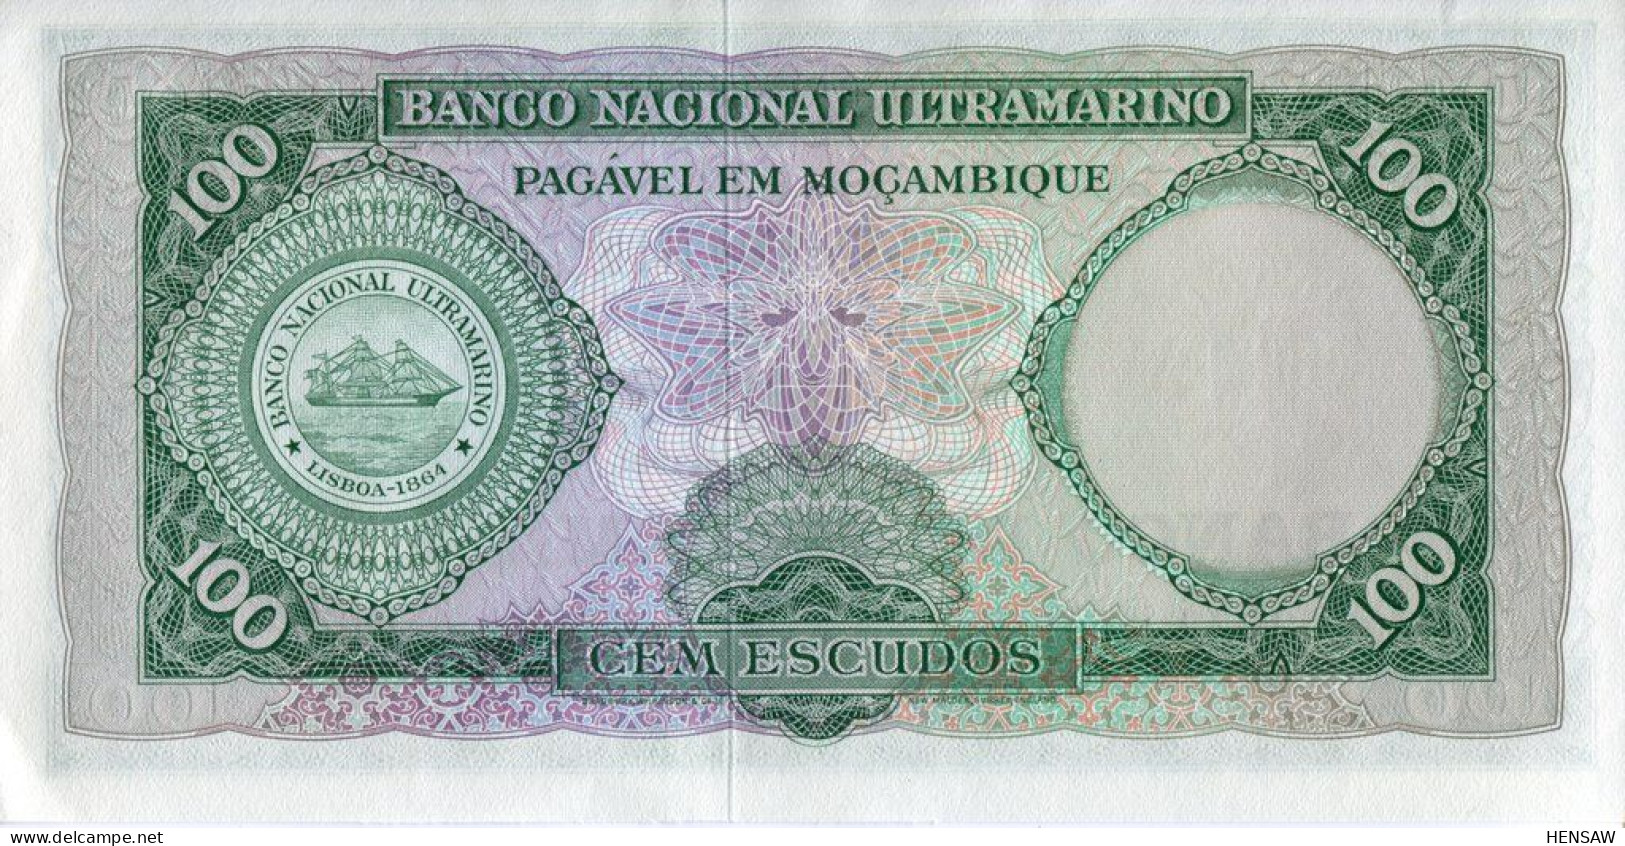 MOZAMBIQUE 100 ESCUDOS P 117 UNC SC NUEVO - Mozambique